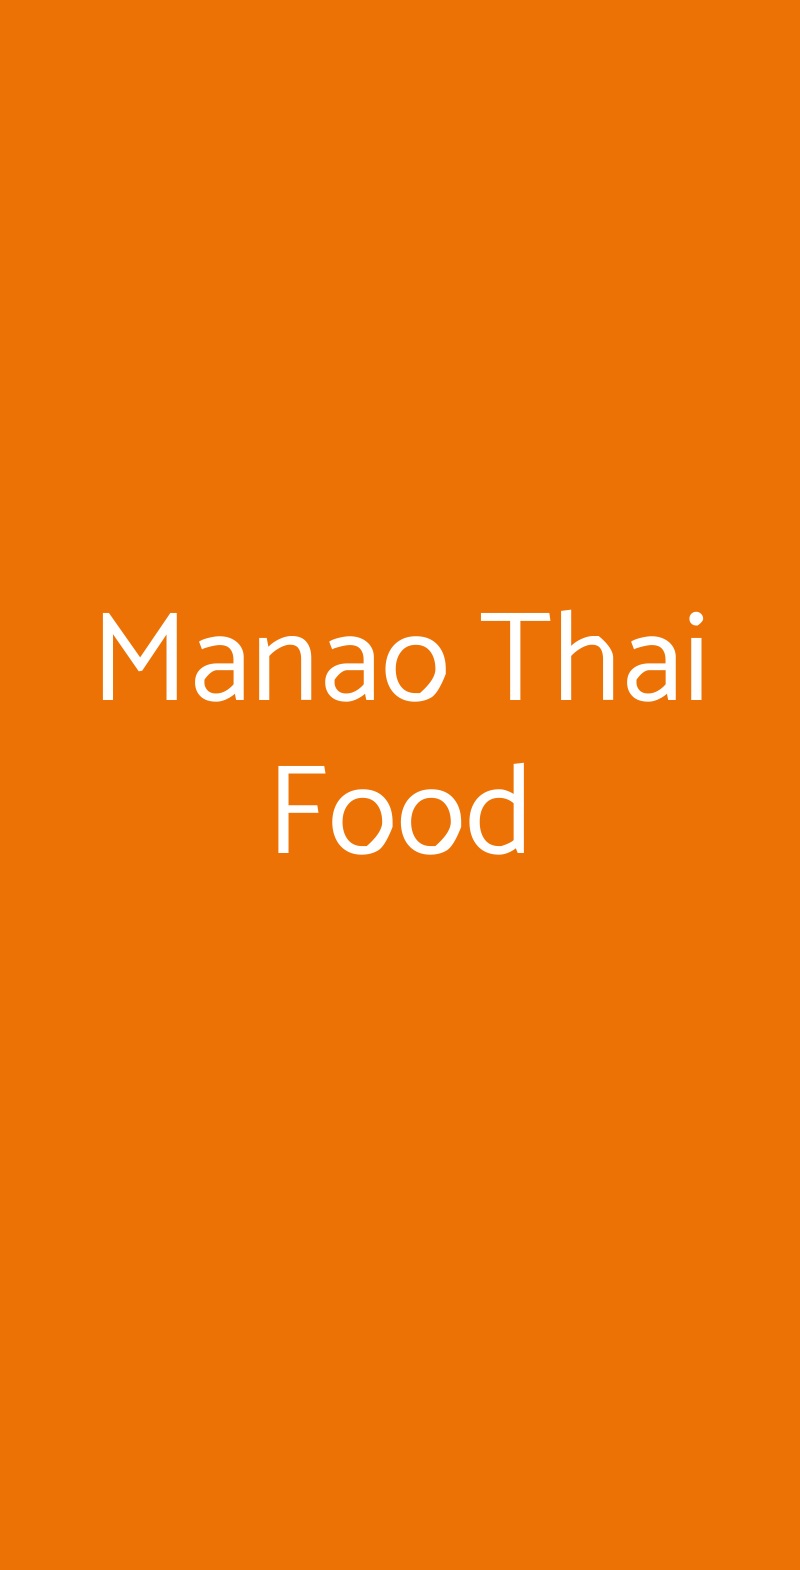 Manao Thai Food Lido di Savio menù 1 pagina